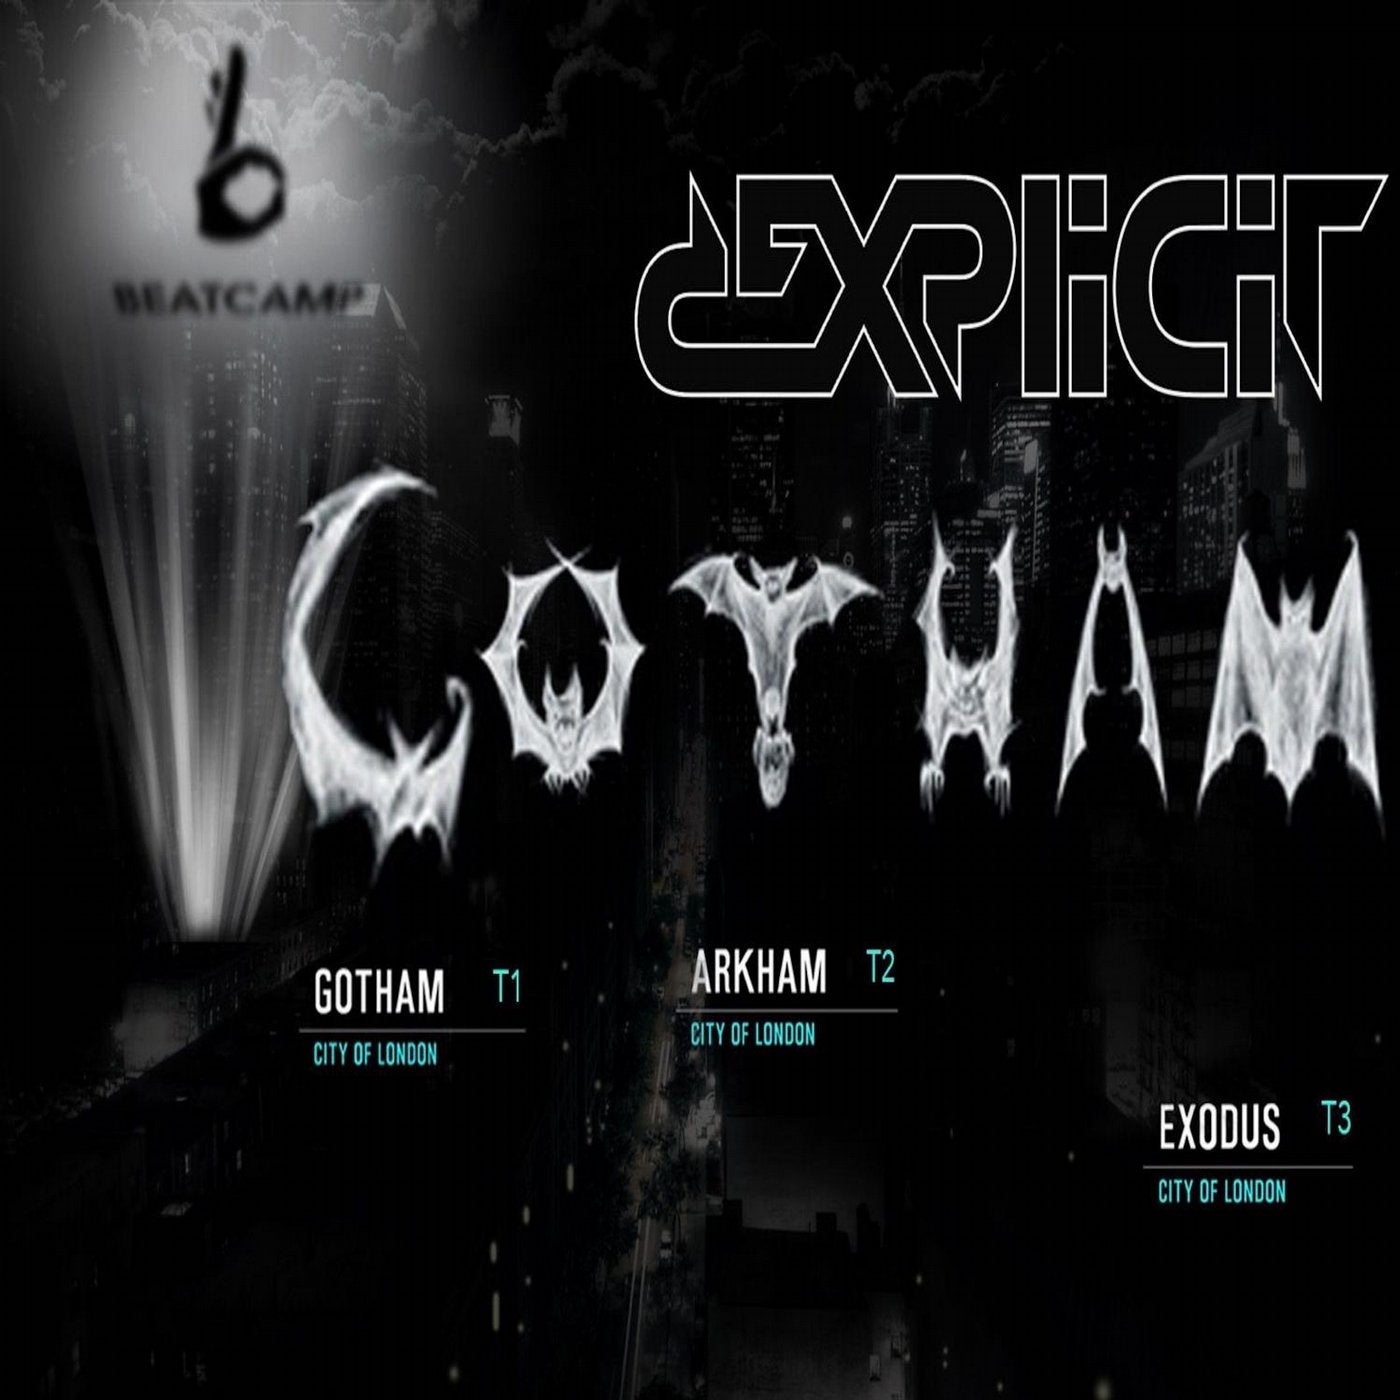 Готэм текст песни. Arkham музыкальный альбом. Текст Gotham. The Exodus Song.